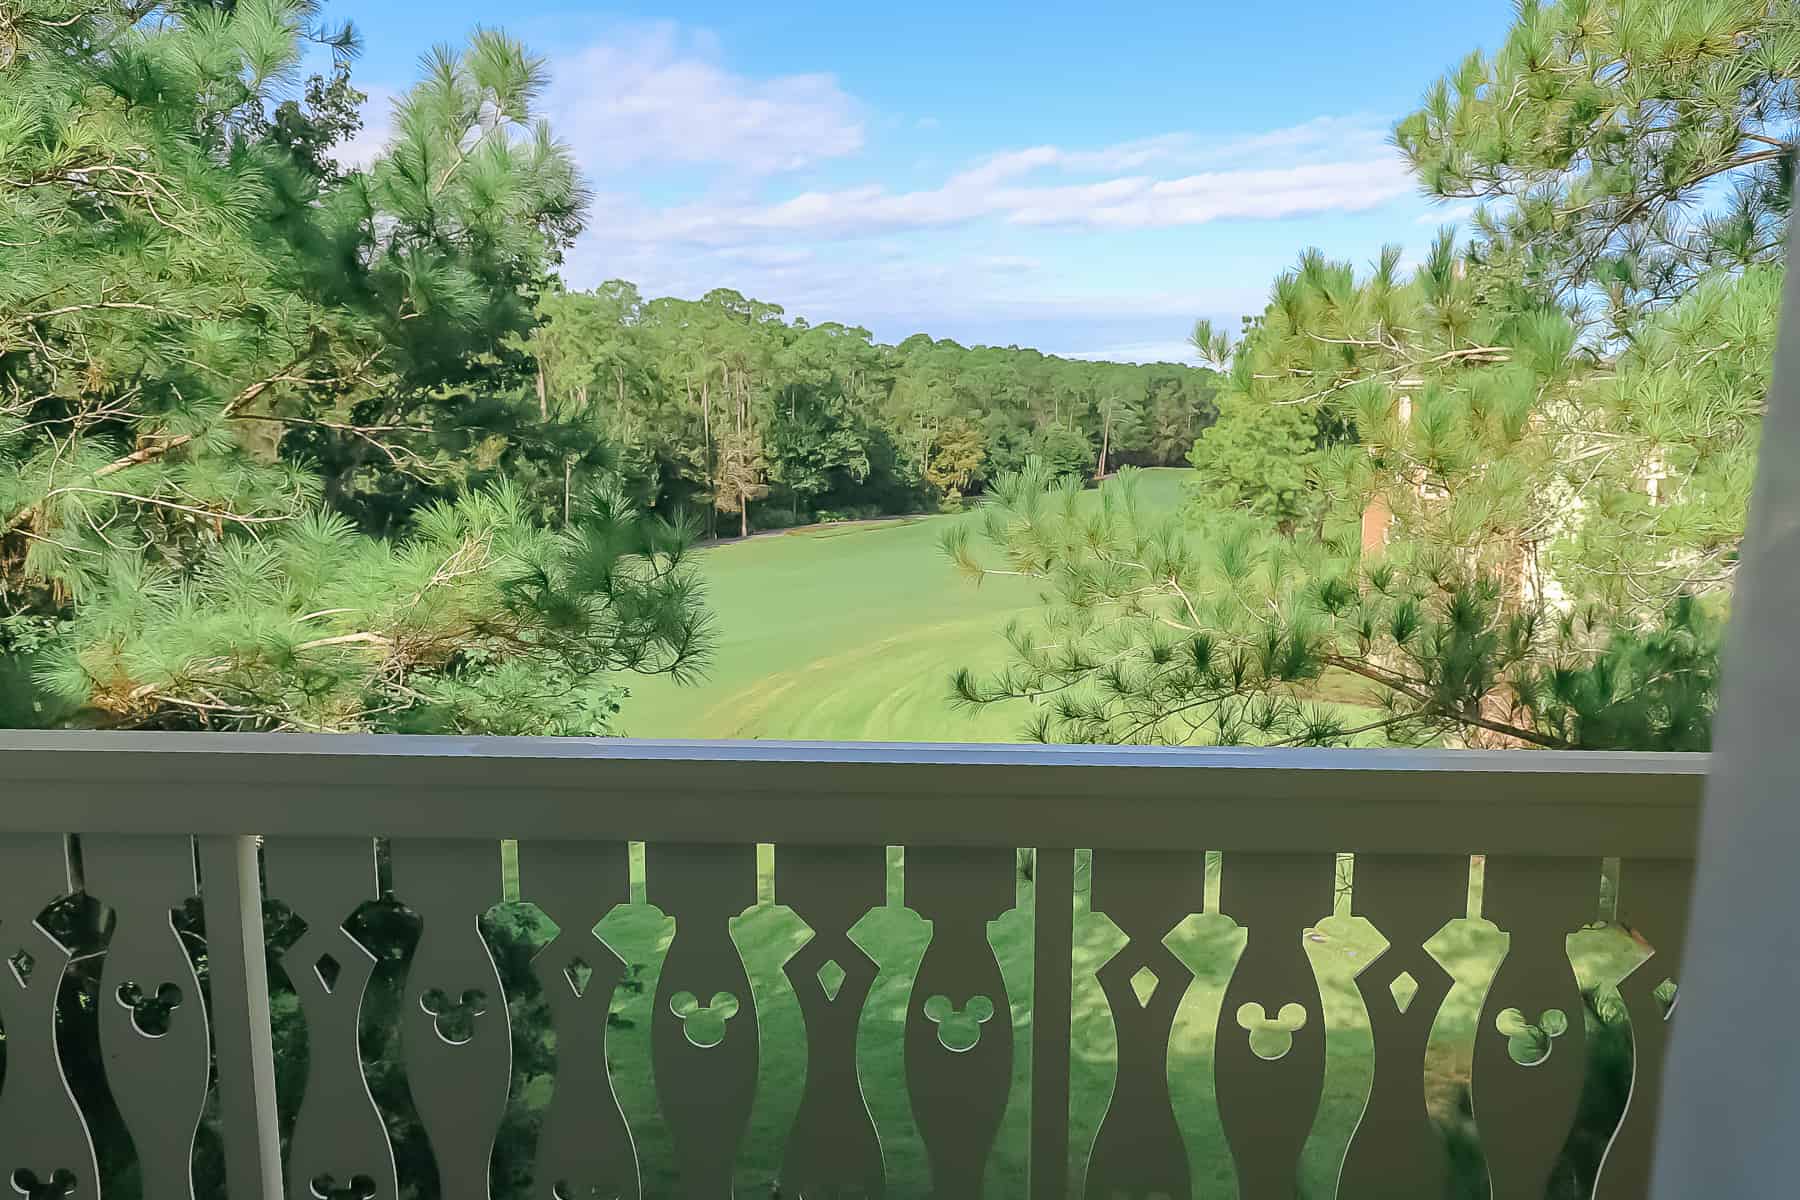 hidden Mickey's in railings on the balcony 